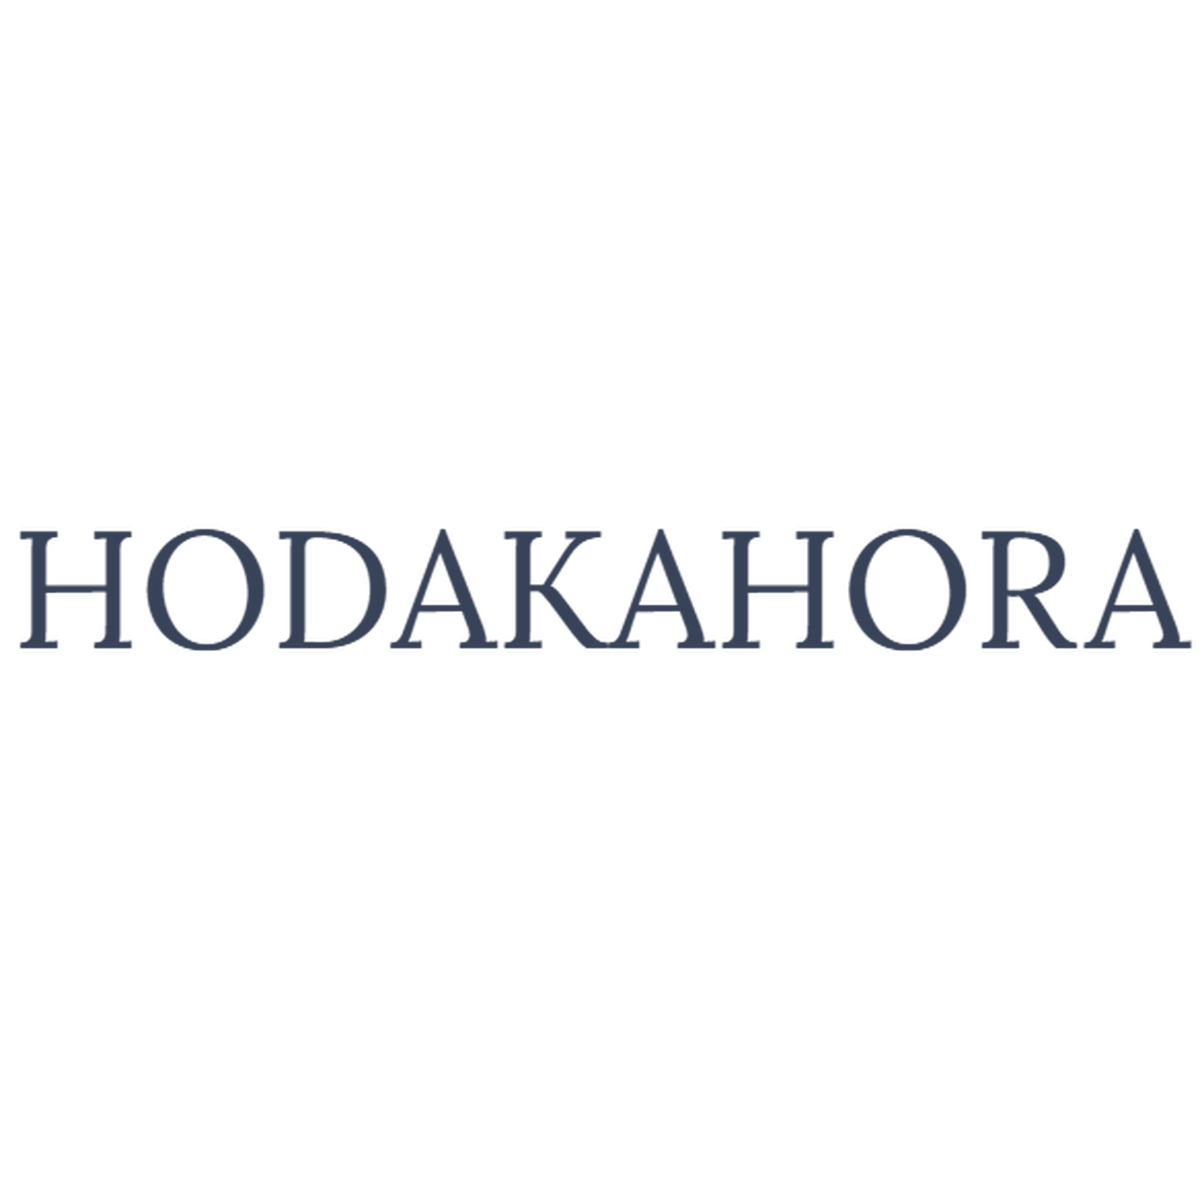 Hodakahora